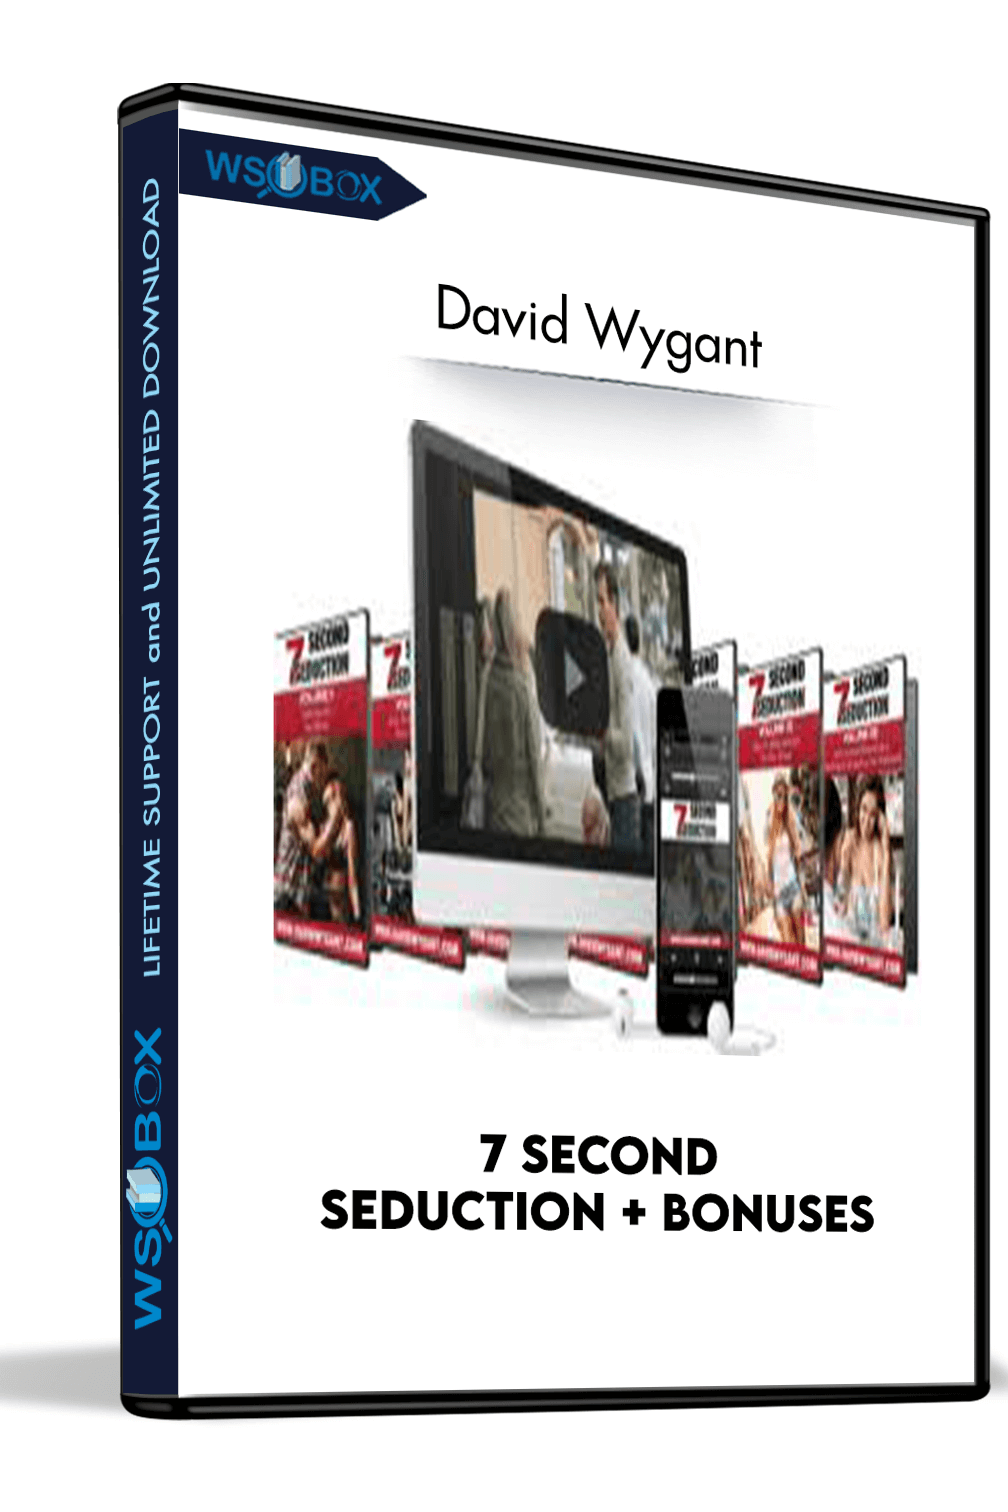 7 Second Seduction and Bonuses – David Wygant